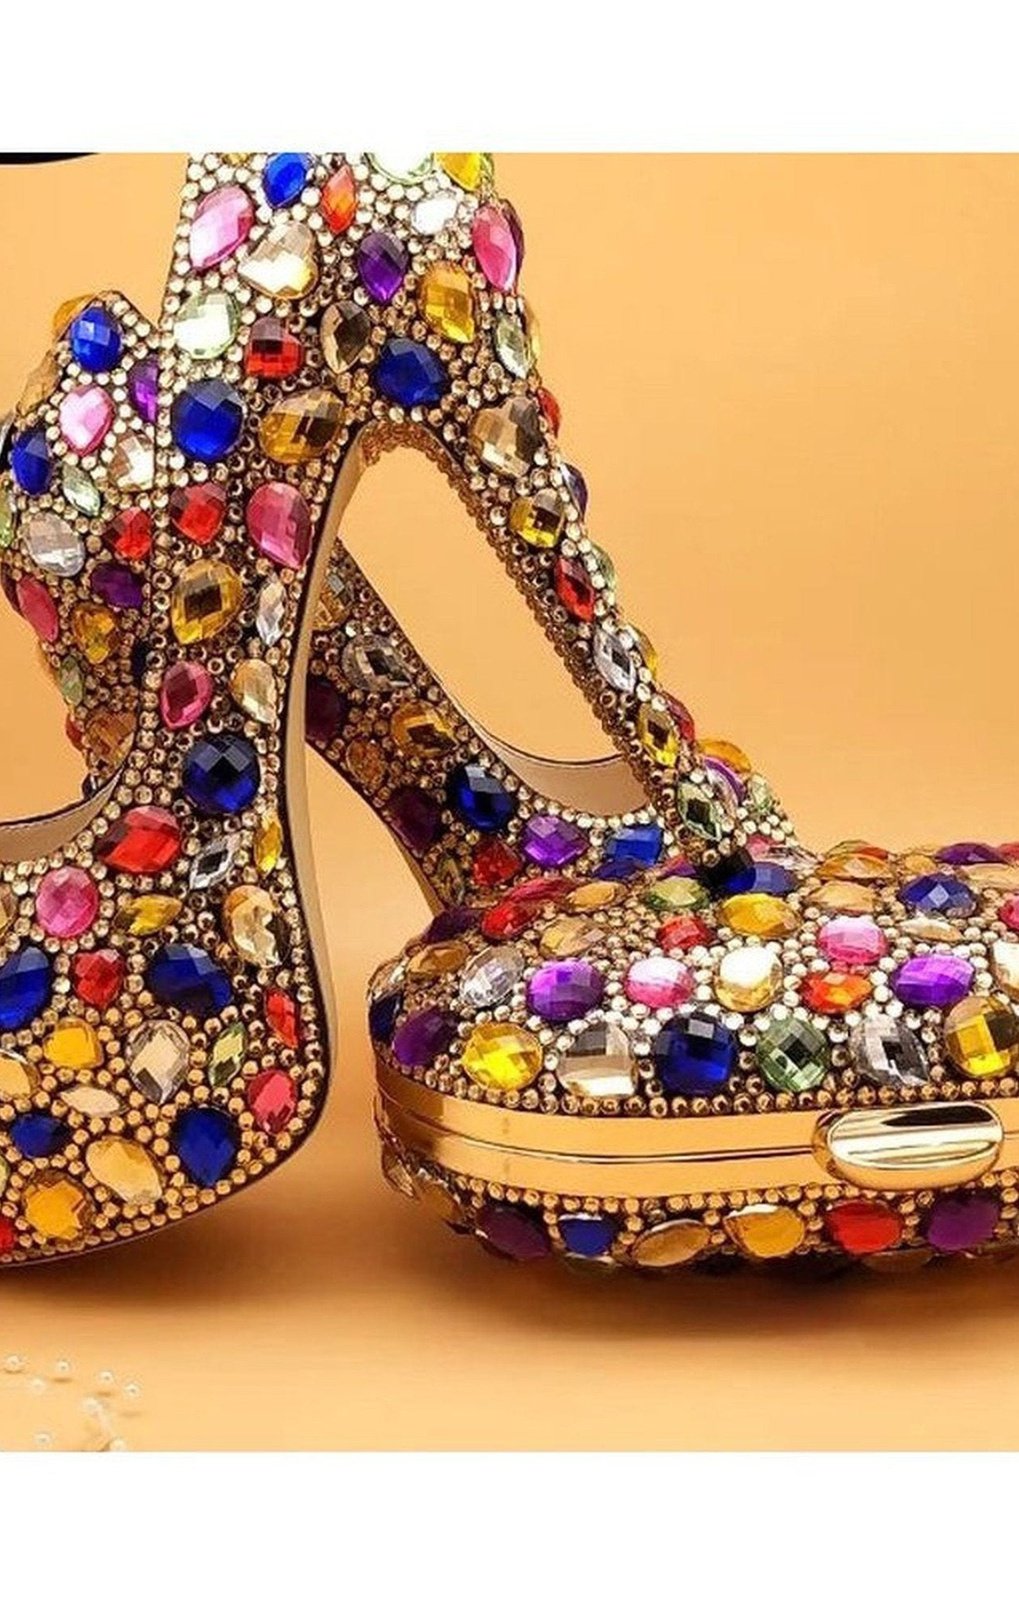 Women’s Stone heels matching clutch purse